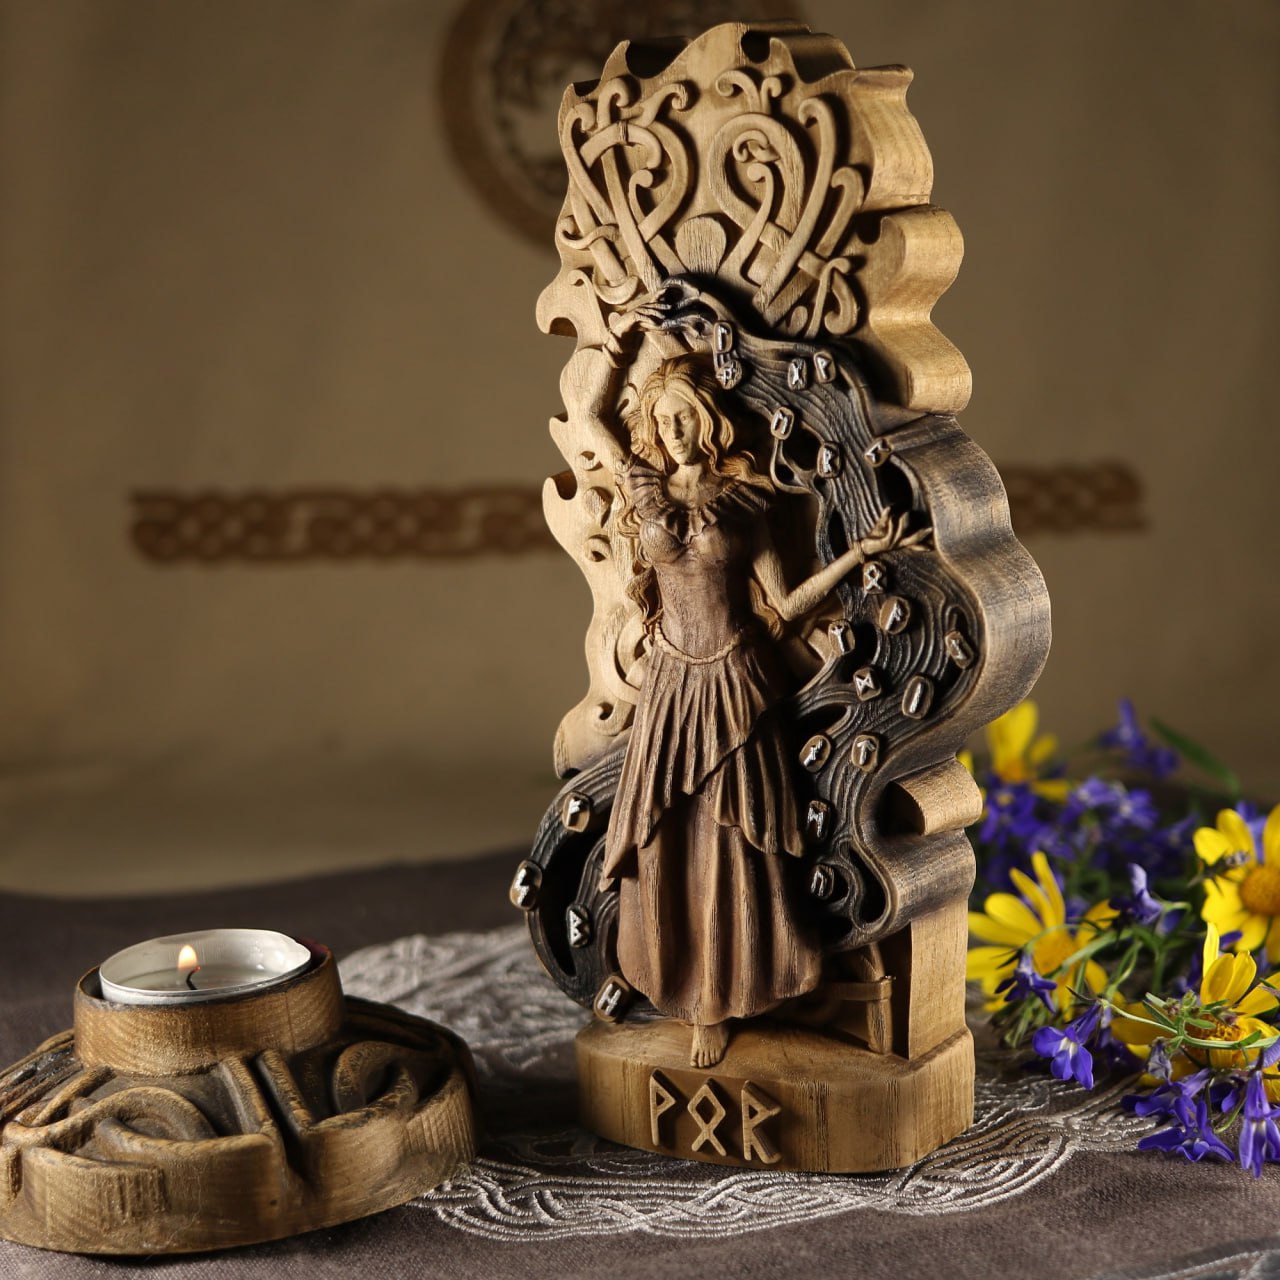 Vör Wooden Statue - A Sacred Symbol of Wisdom for Your Asatru Altar